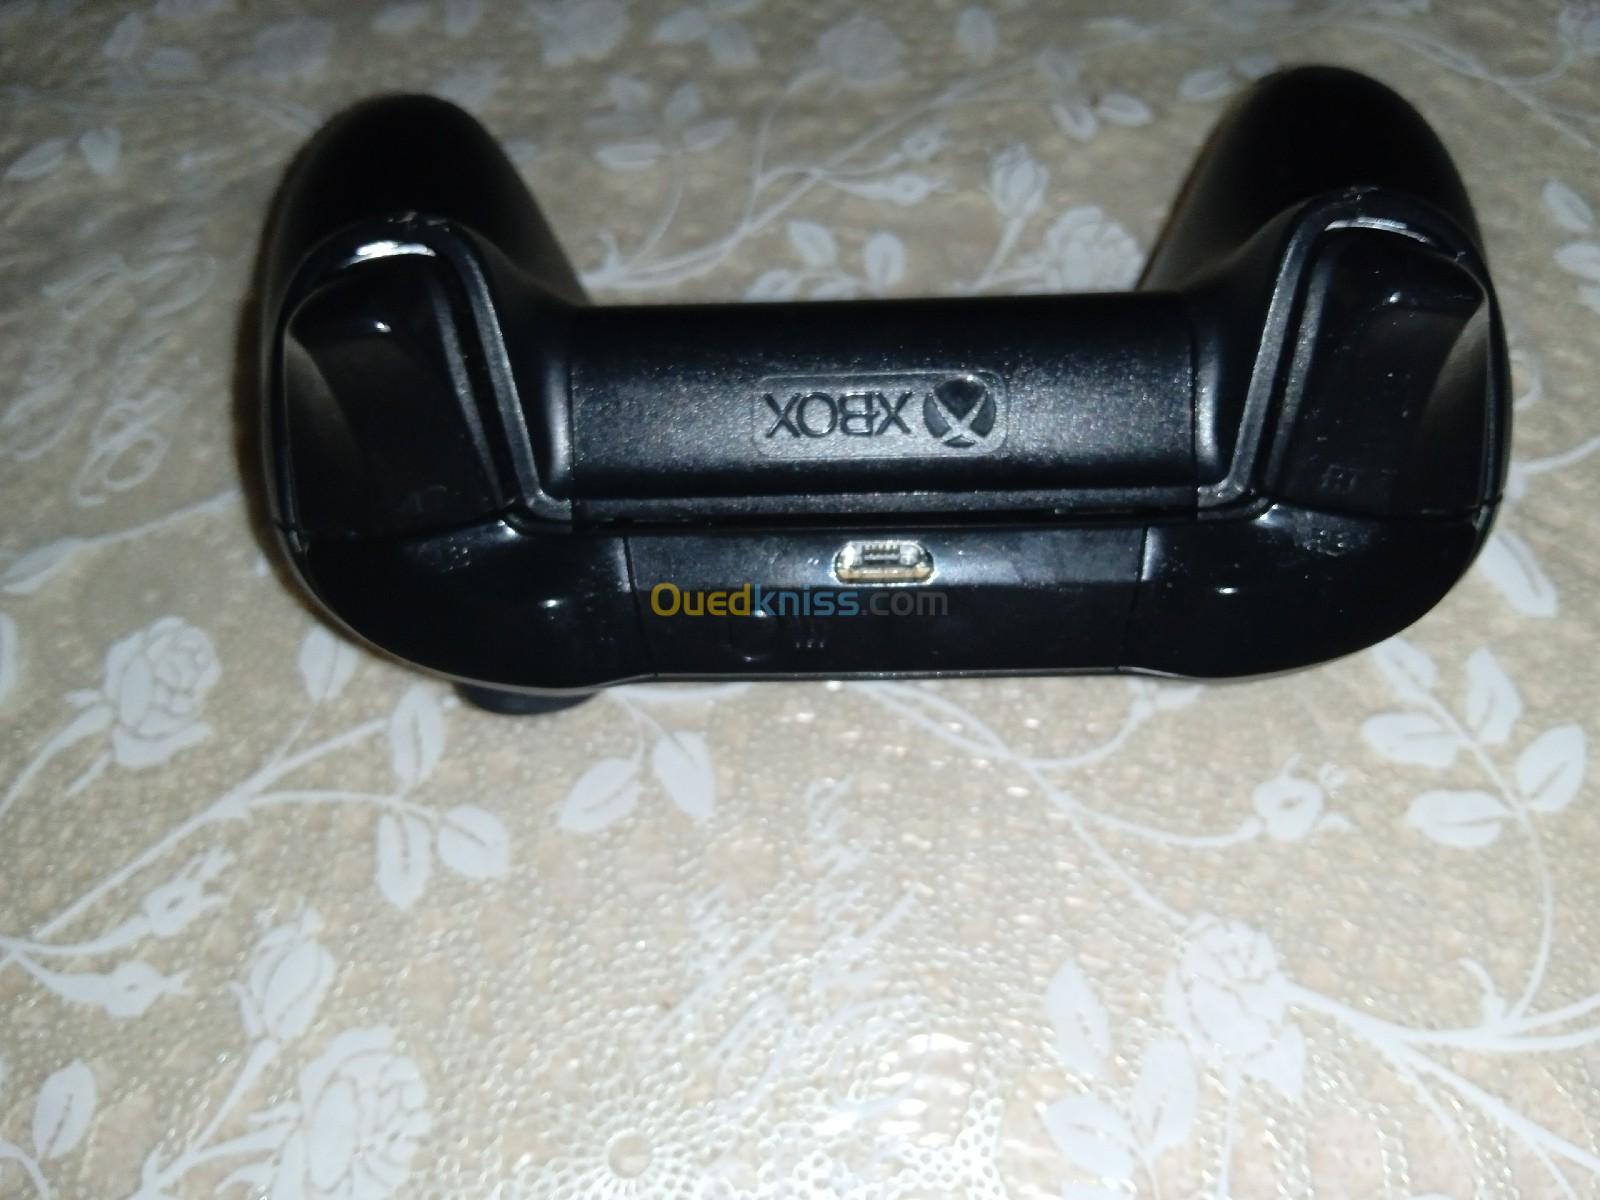 Xbox one fat 382jg